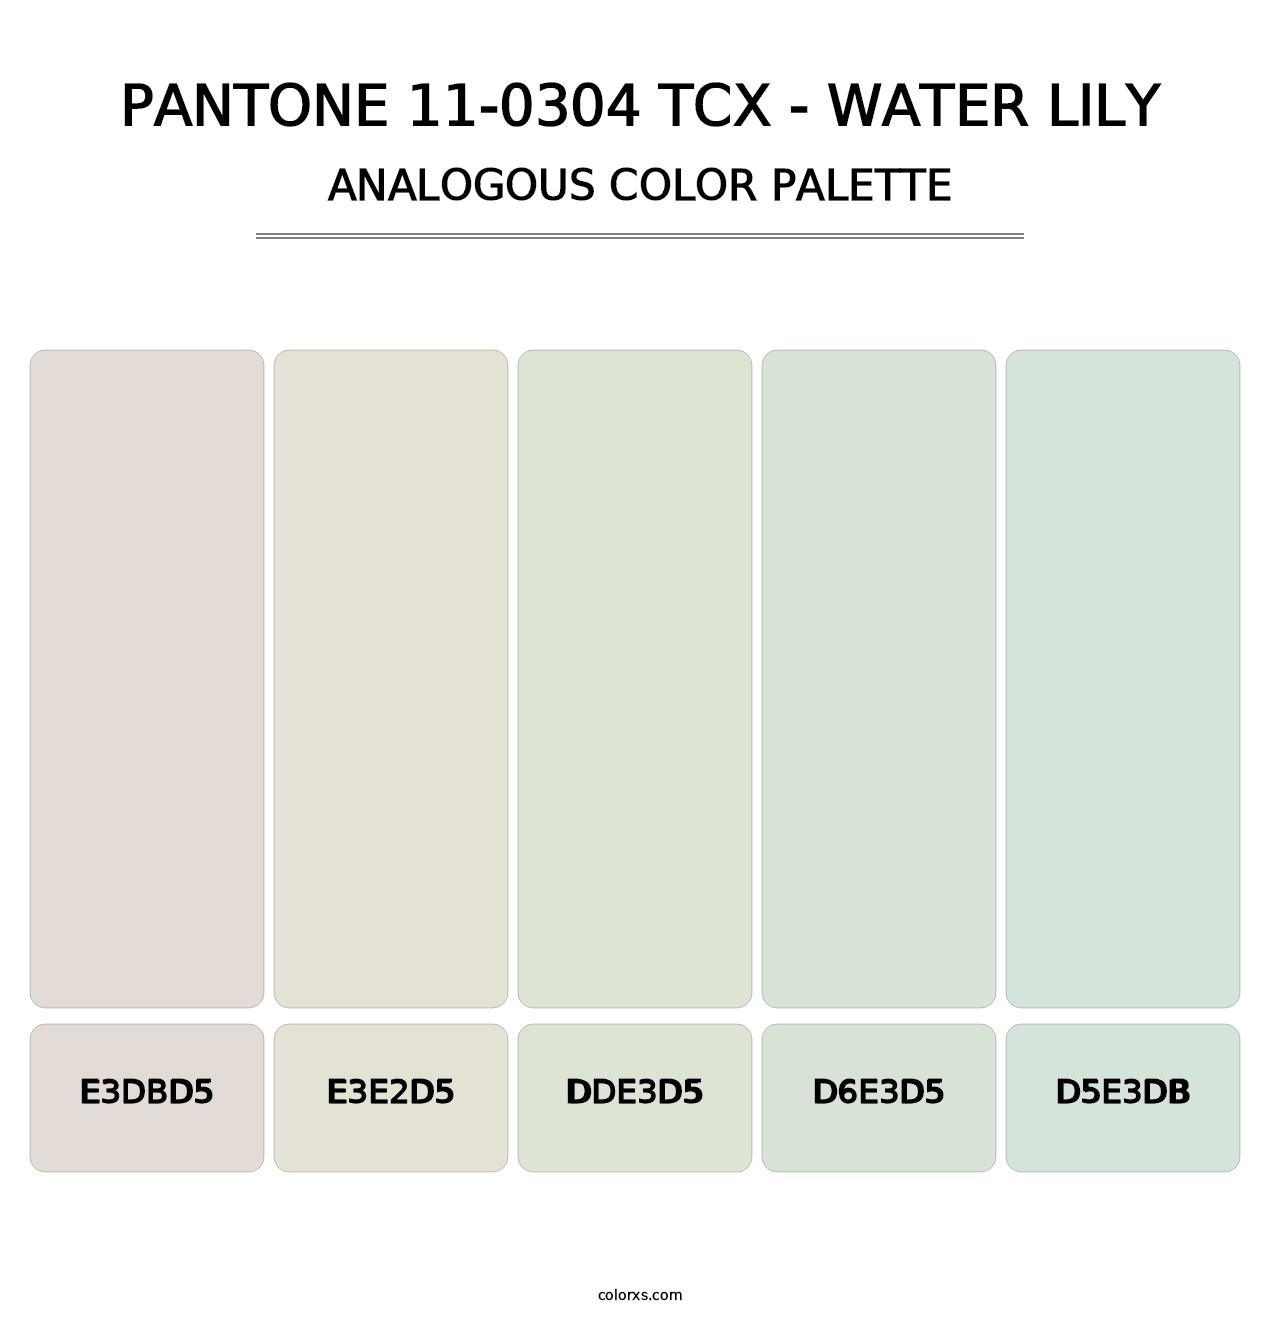 PANTONE 11-0304 TCX - Water Lily - Analogous Color Palette